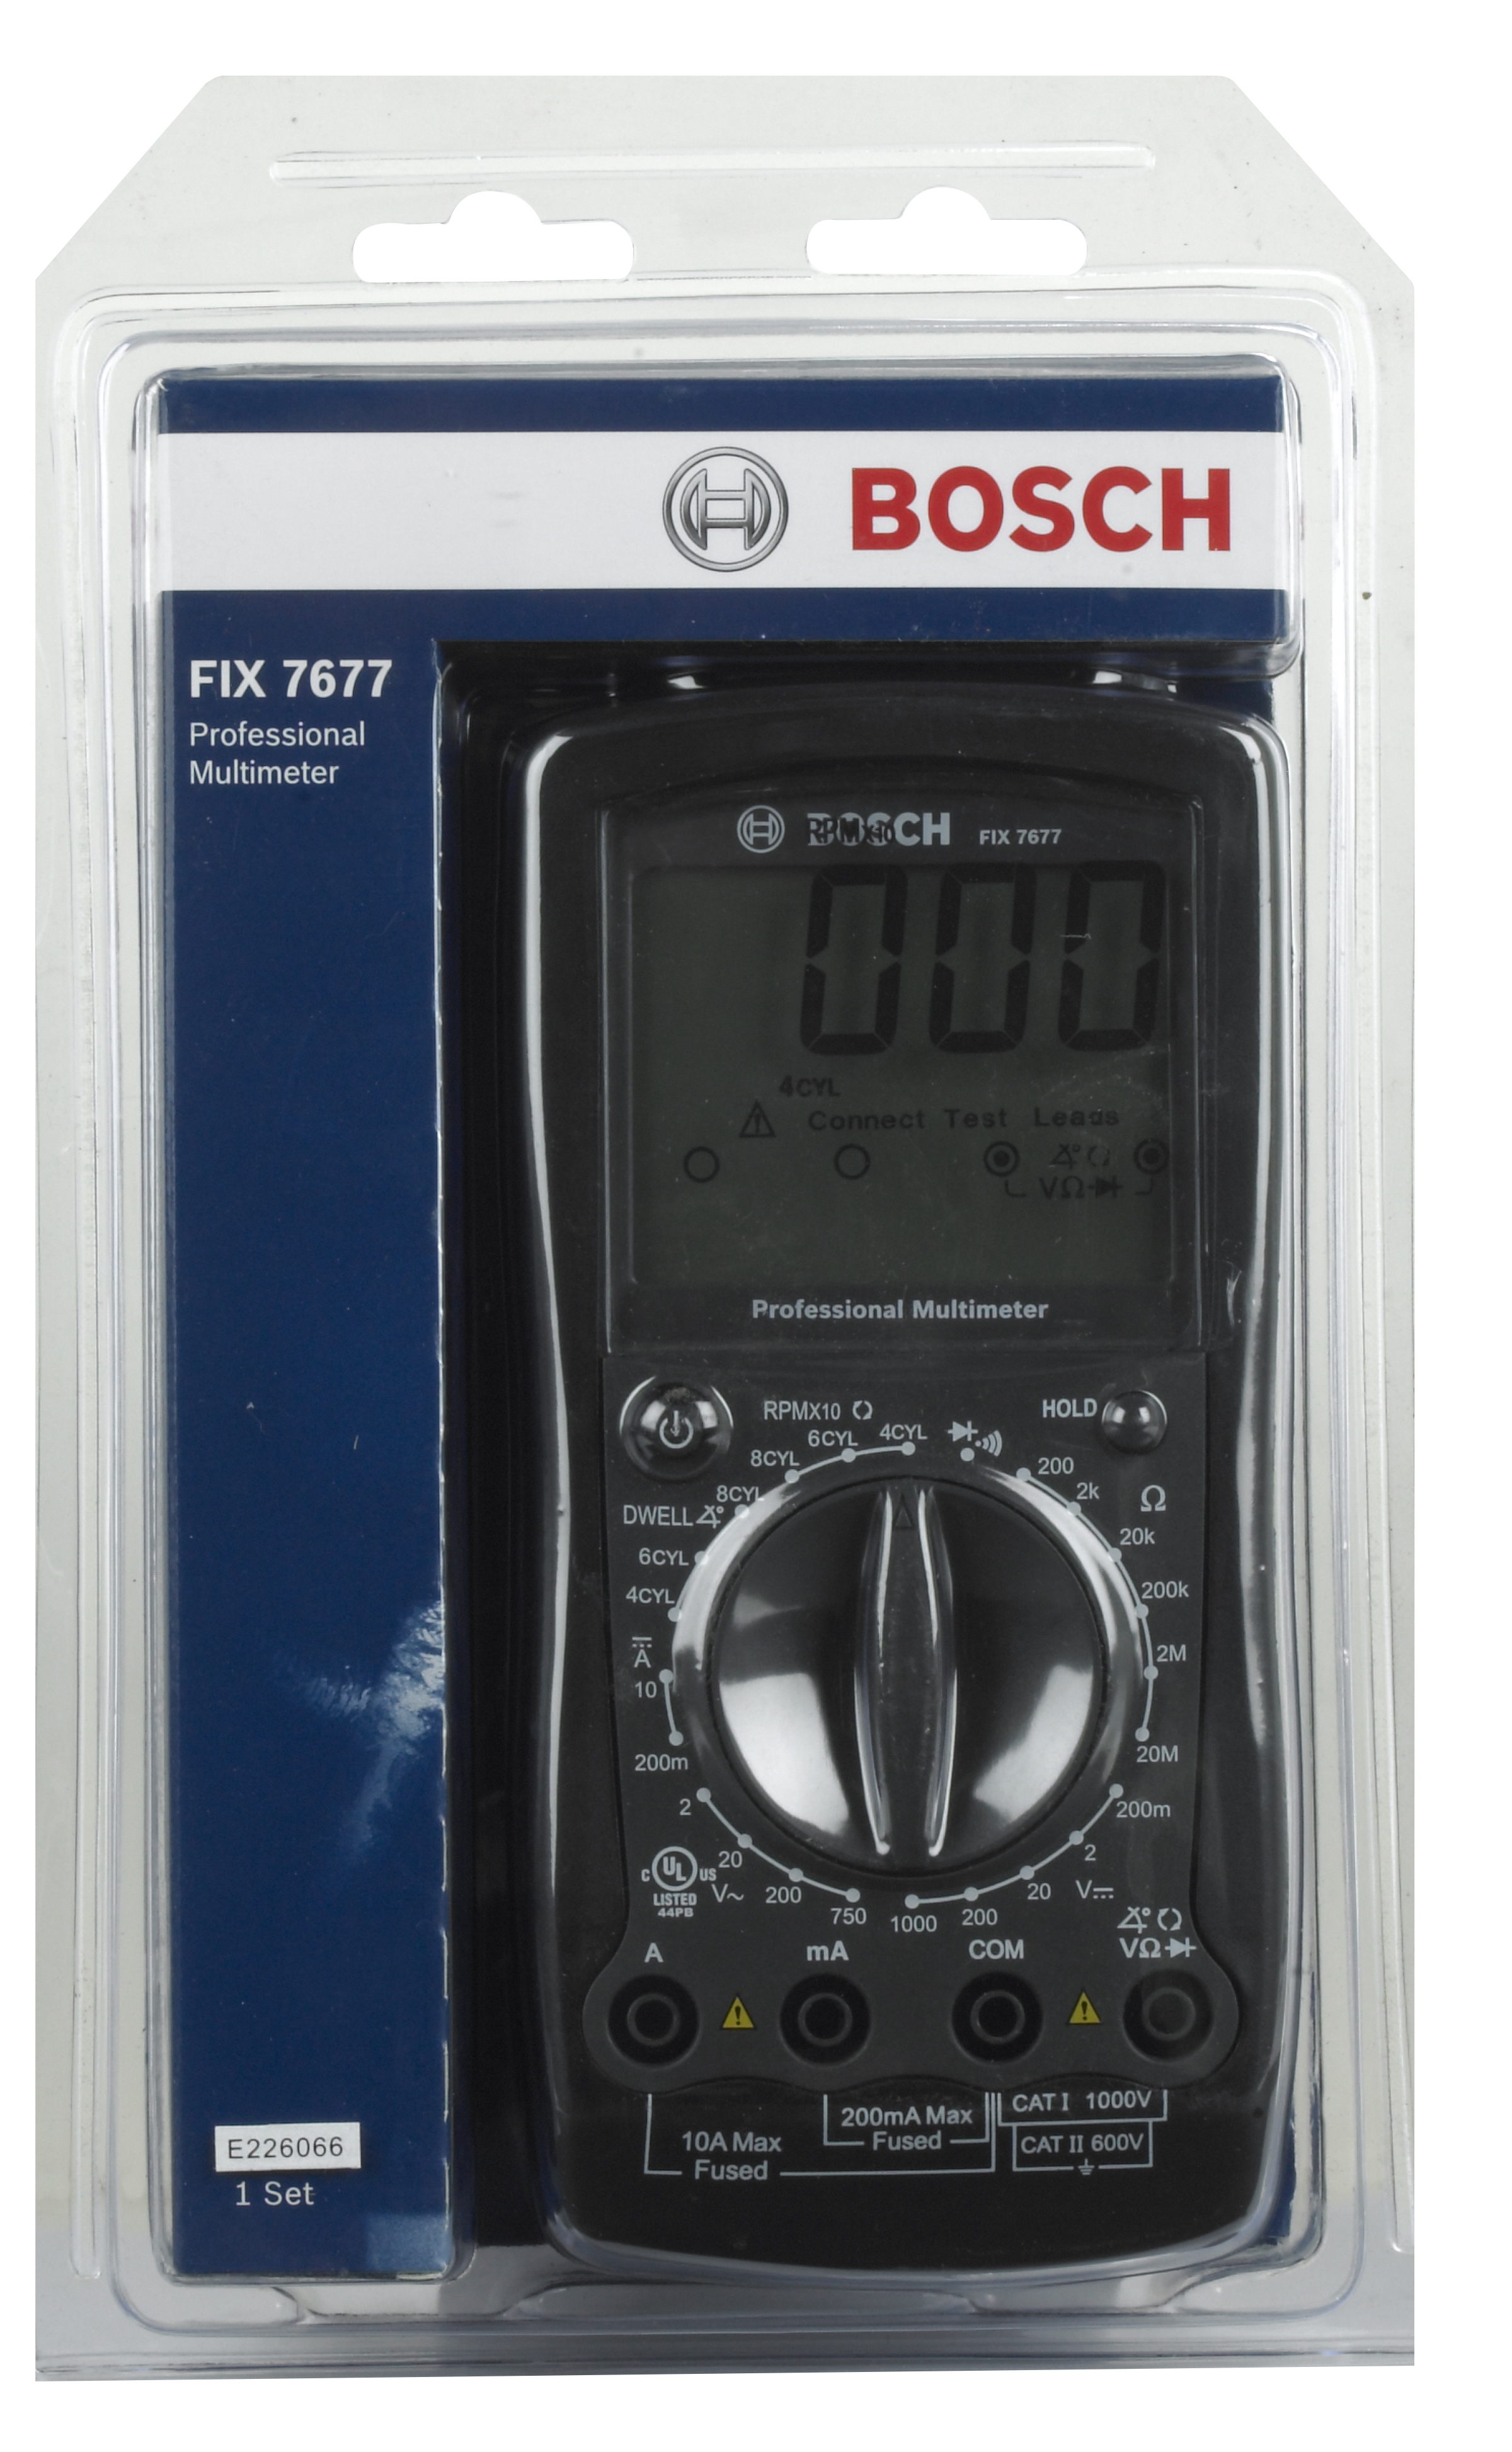 Bosch Professional Digital Multimeter FIX 7677 Lot of 1 